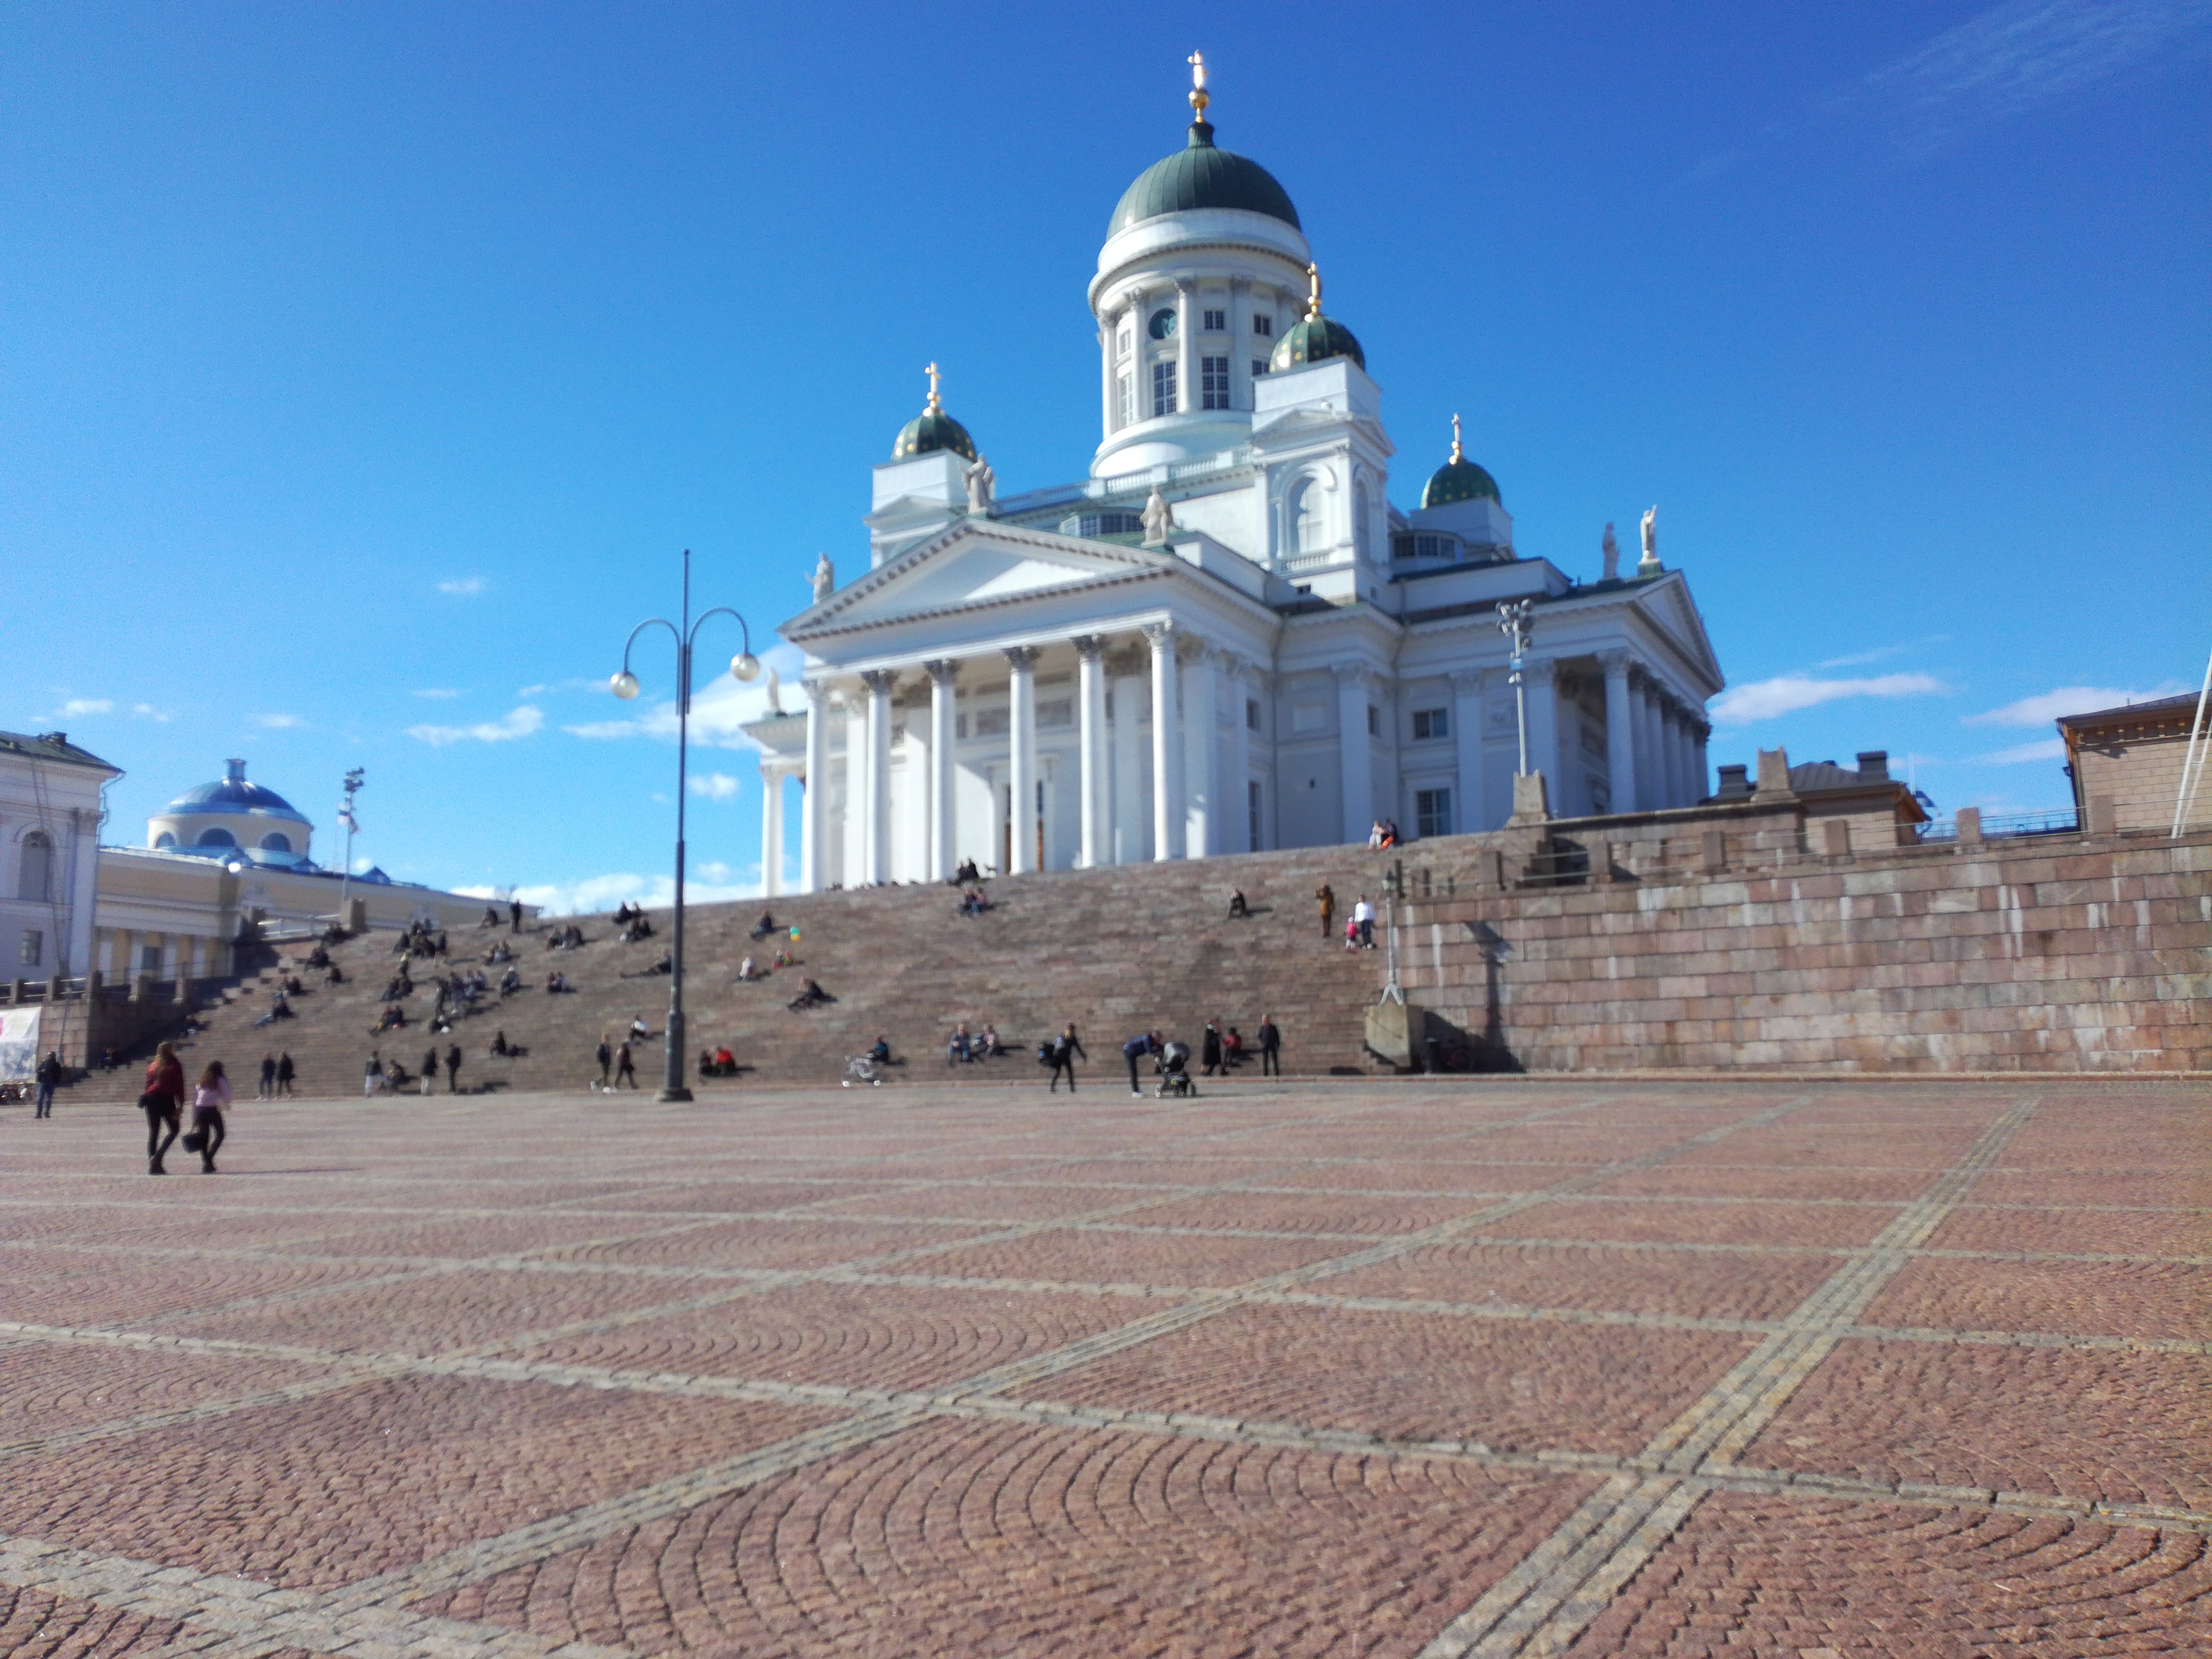 Tourists at the Senate Square in Helsinki, background Toomkirik rephoto